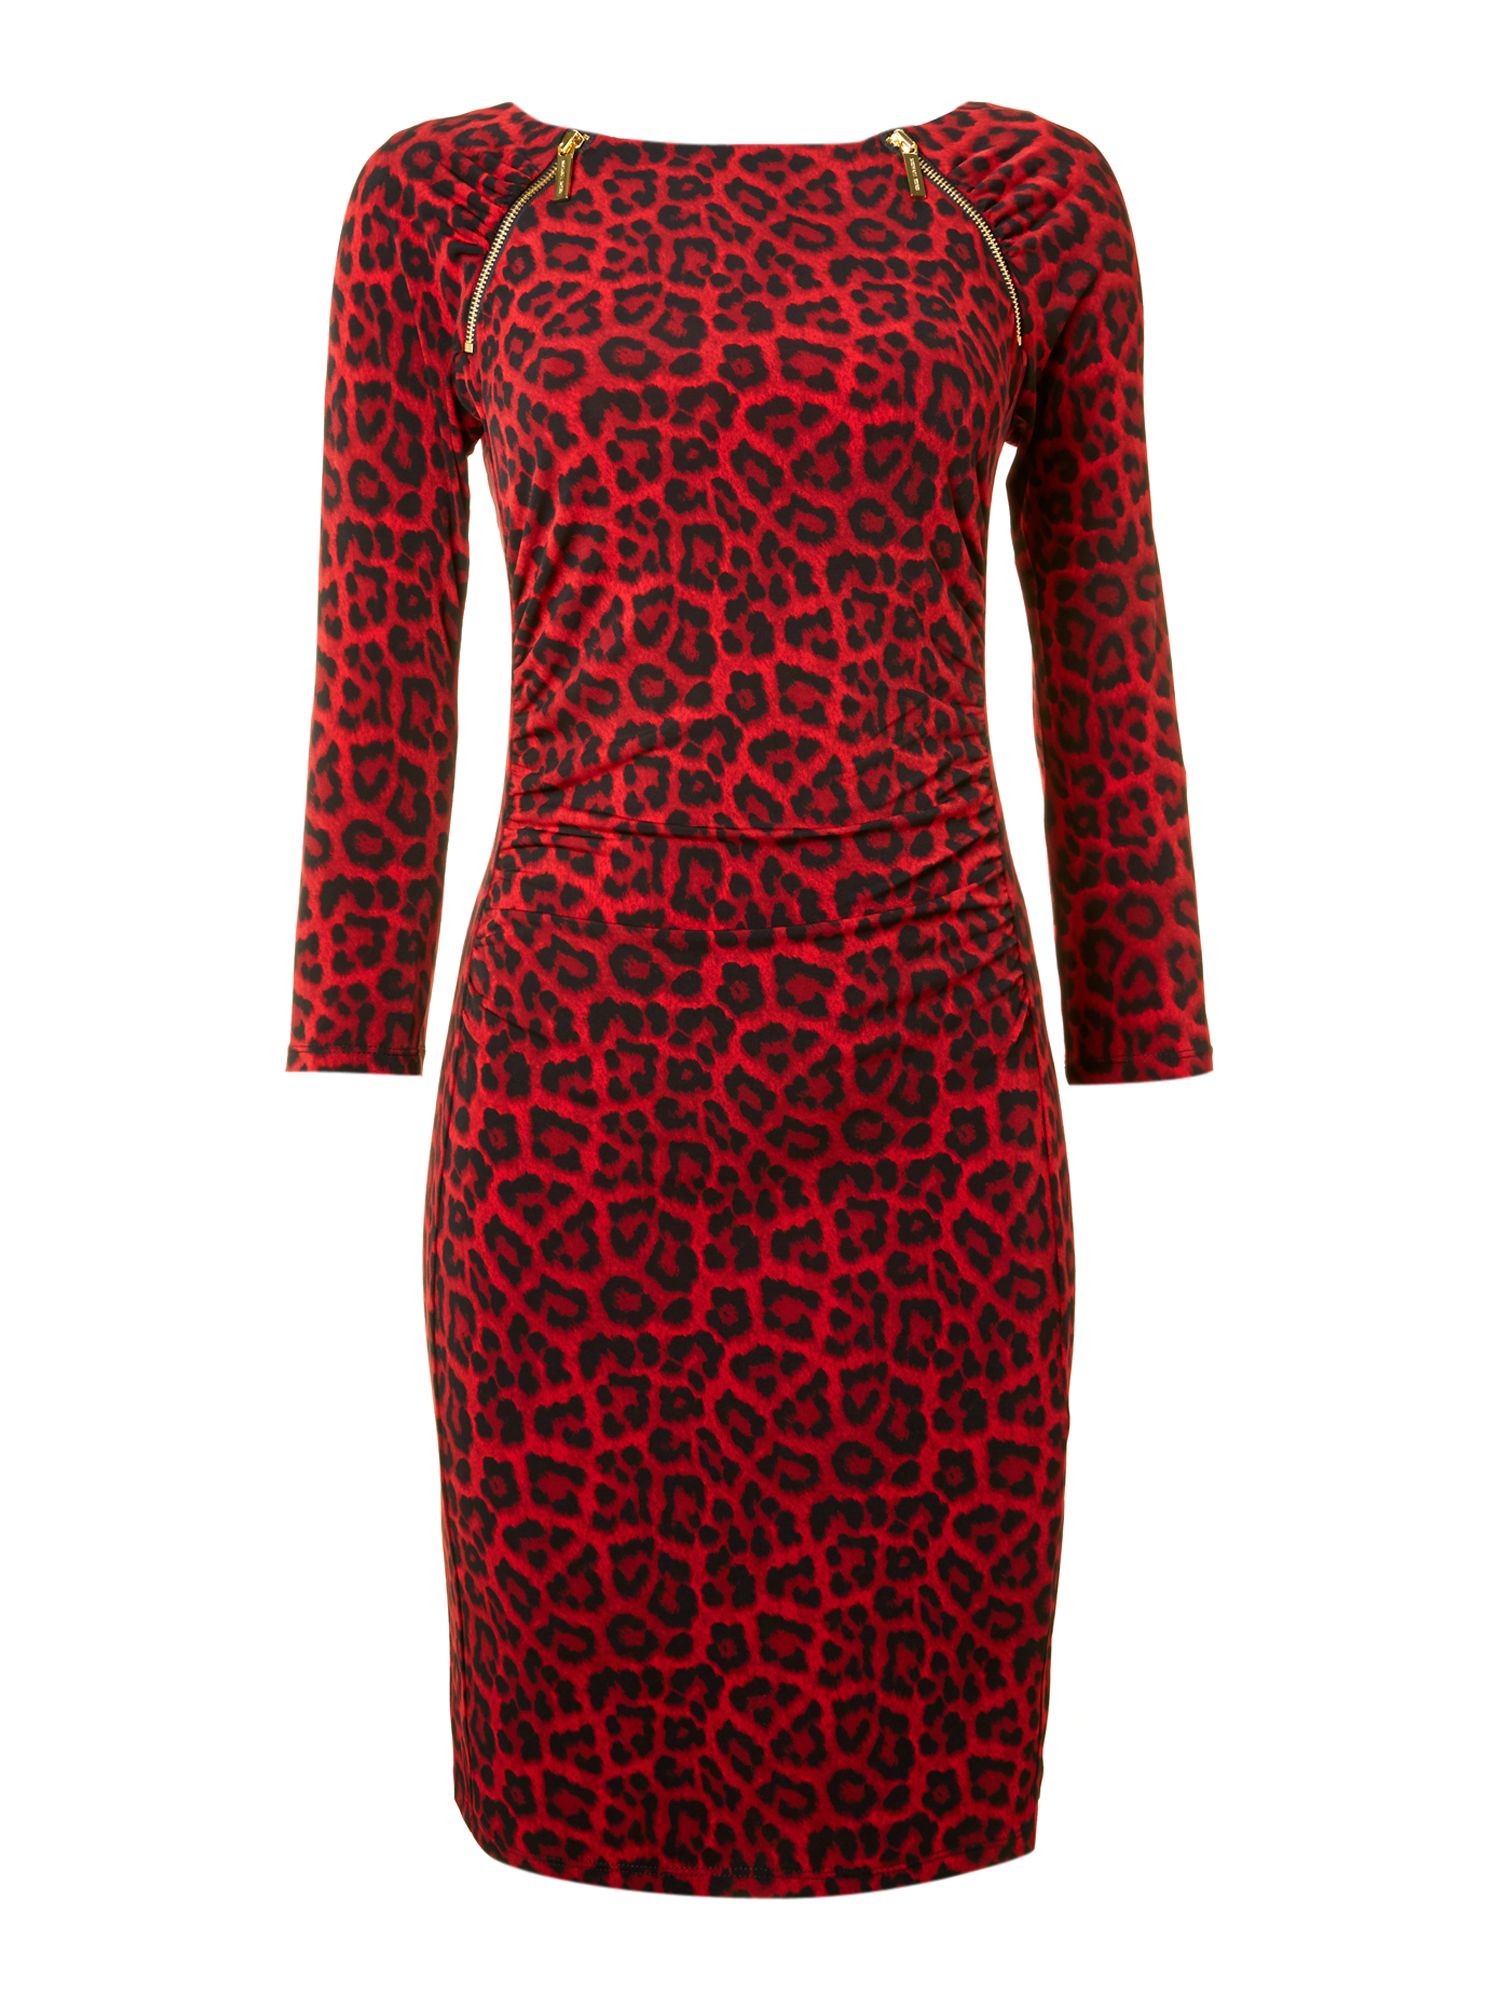 Michael Kors Leopard Print Dress in Red | Lyst